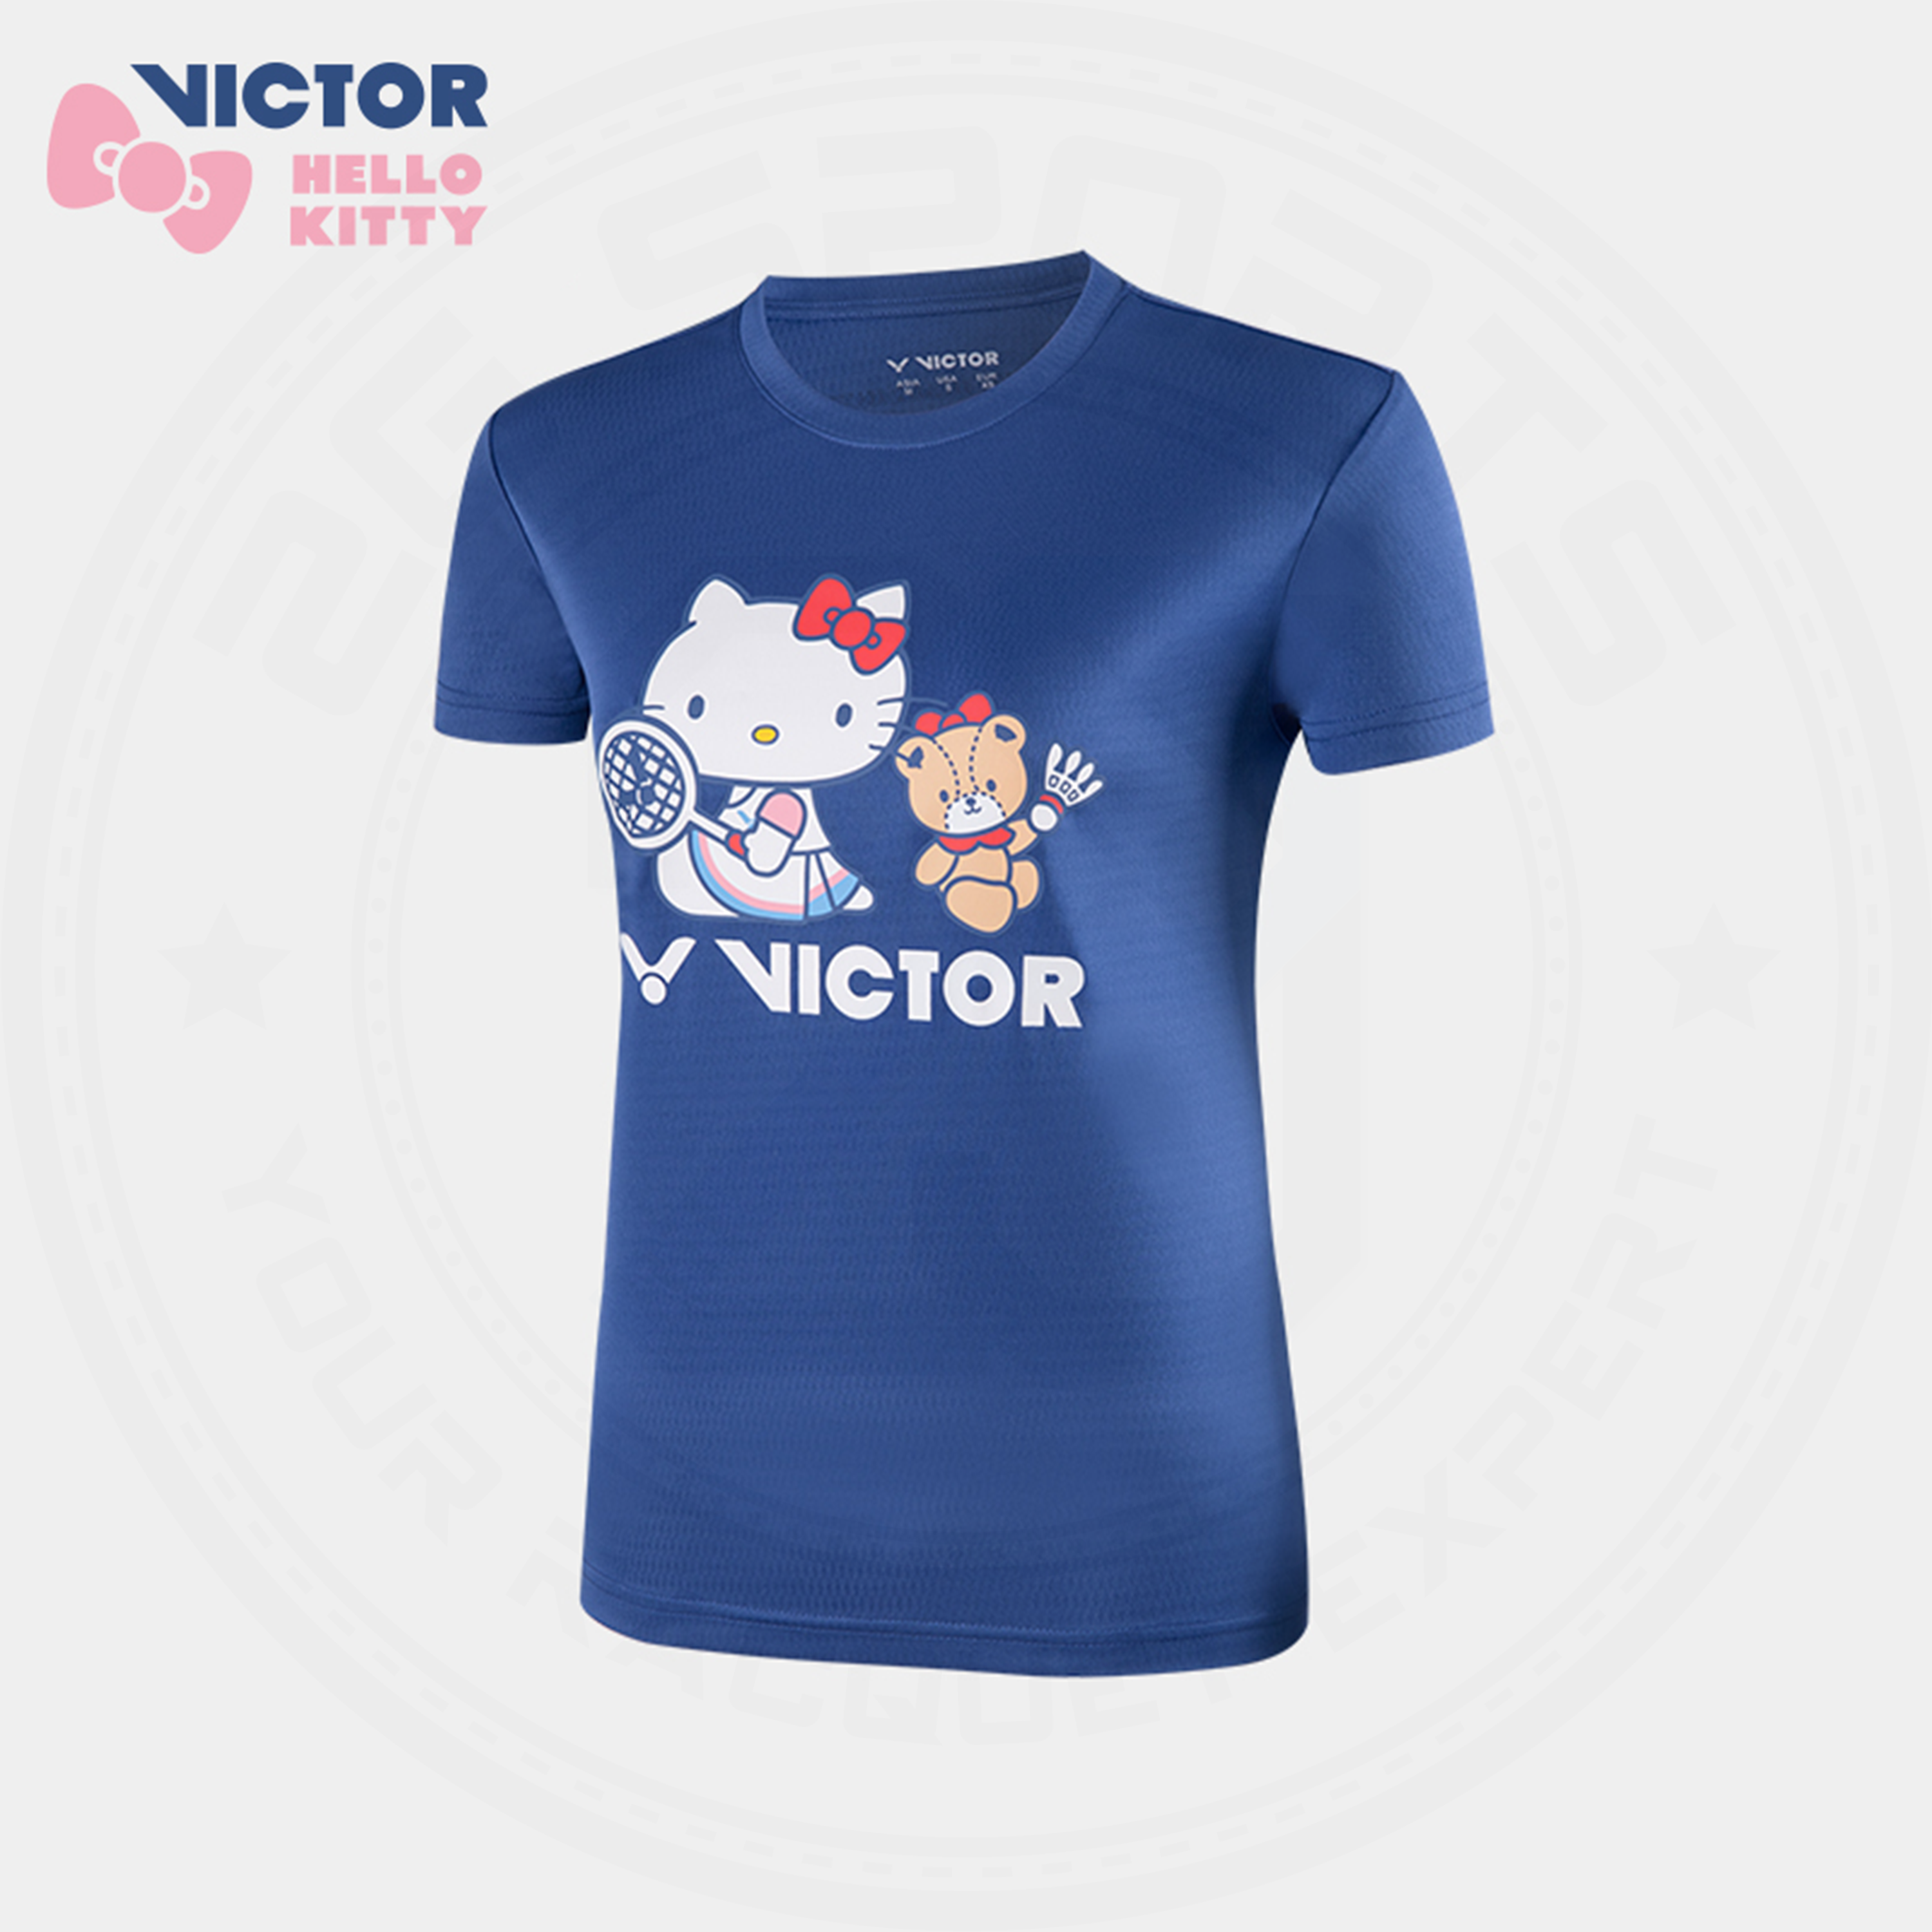 Victor X Hello Kitty T-KT203 Sport Shirt Navy WOMEN'S